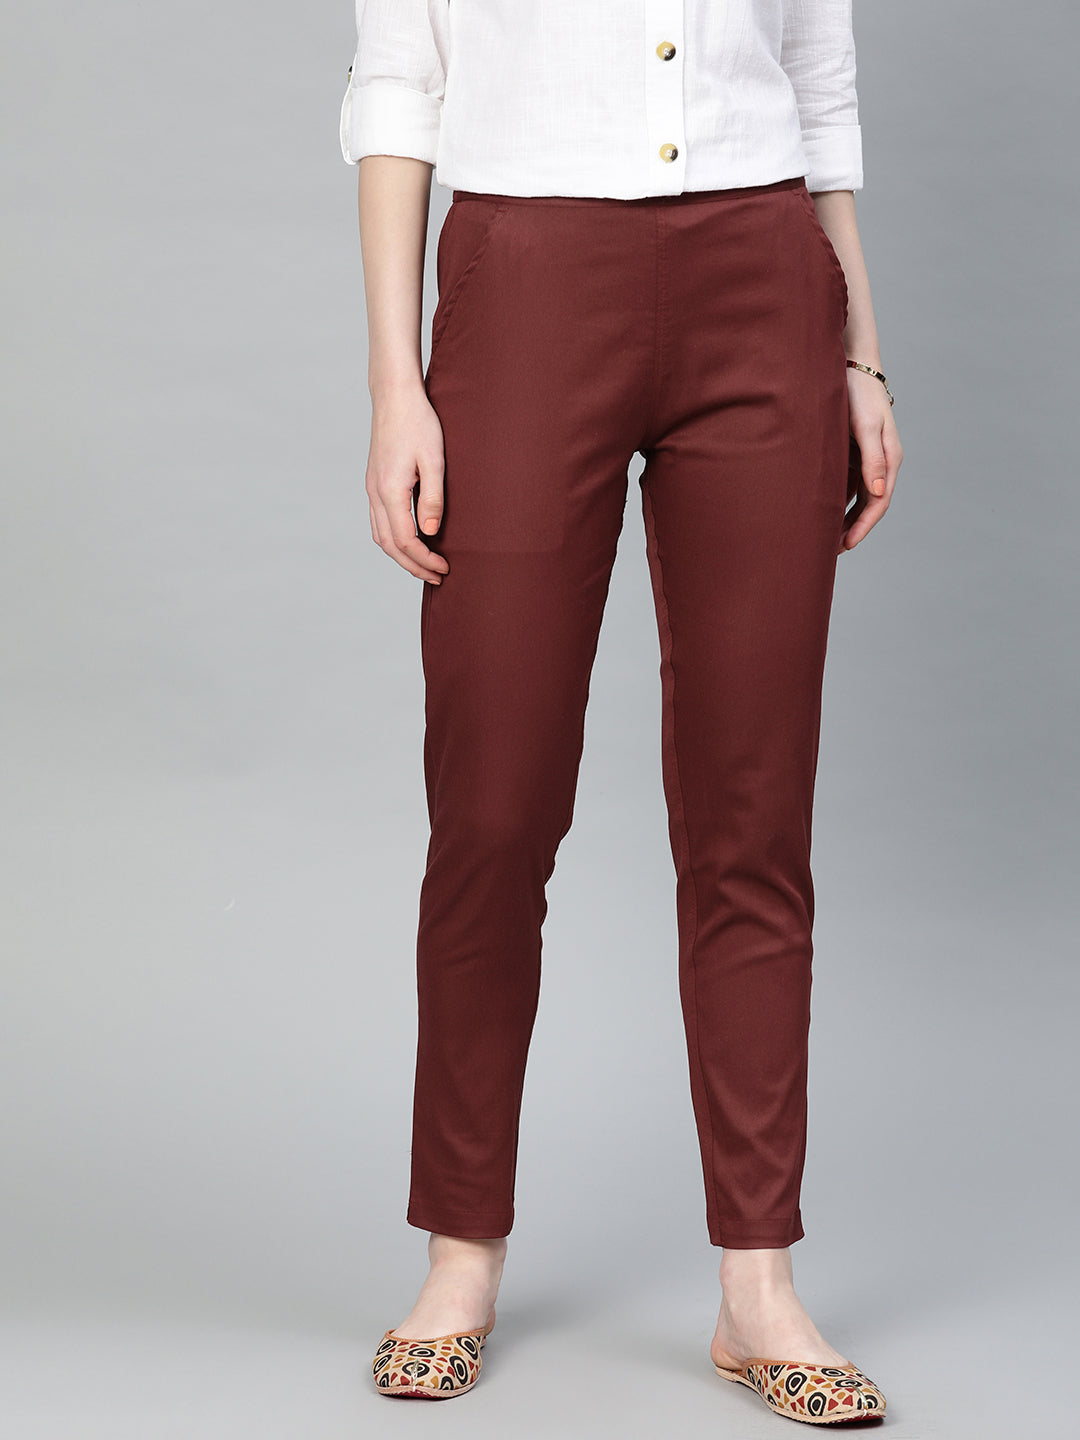 Maroon Solid Cotton Lycra Pants